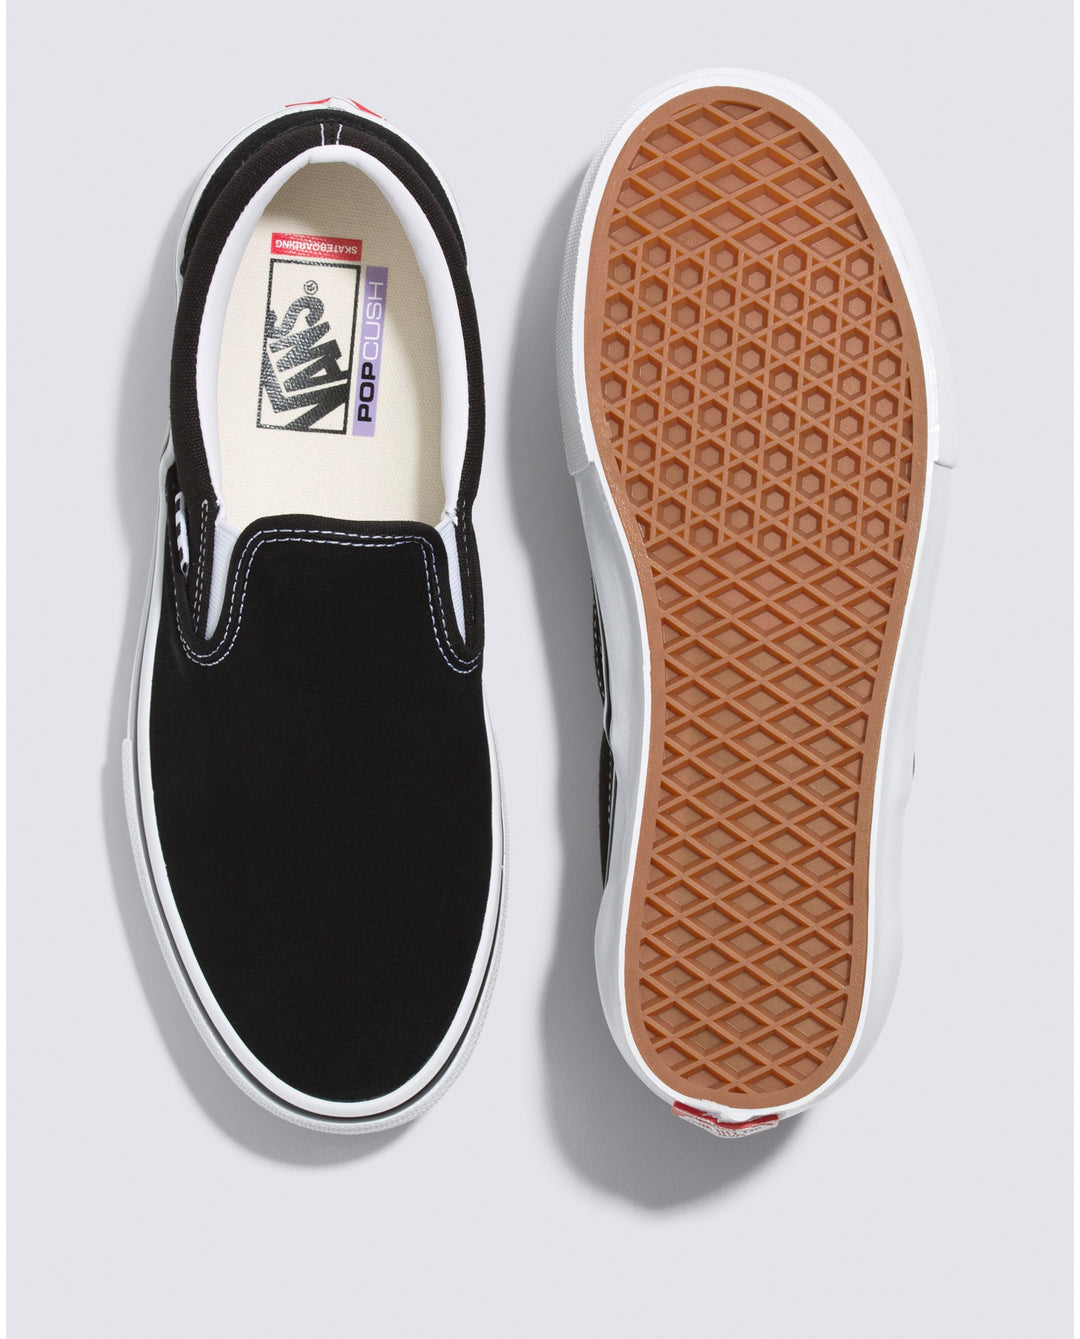 Vans Skate Slip-On Shoe - Black White - Sun Diego Boardshop